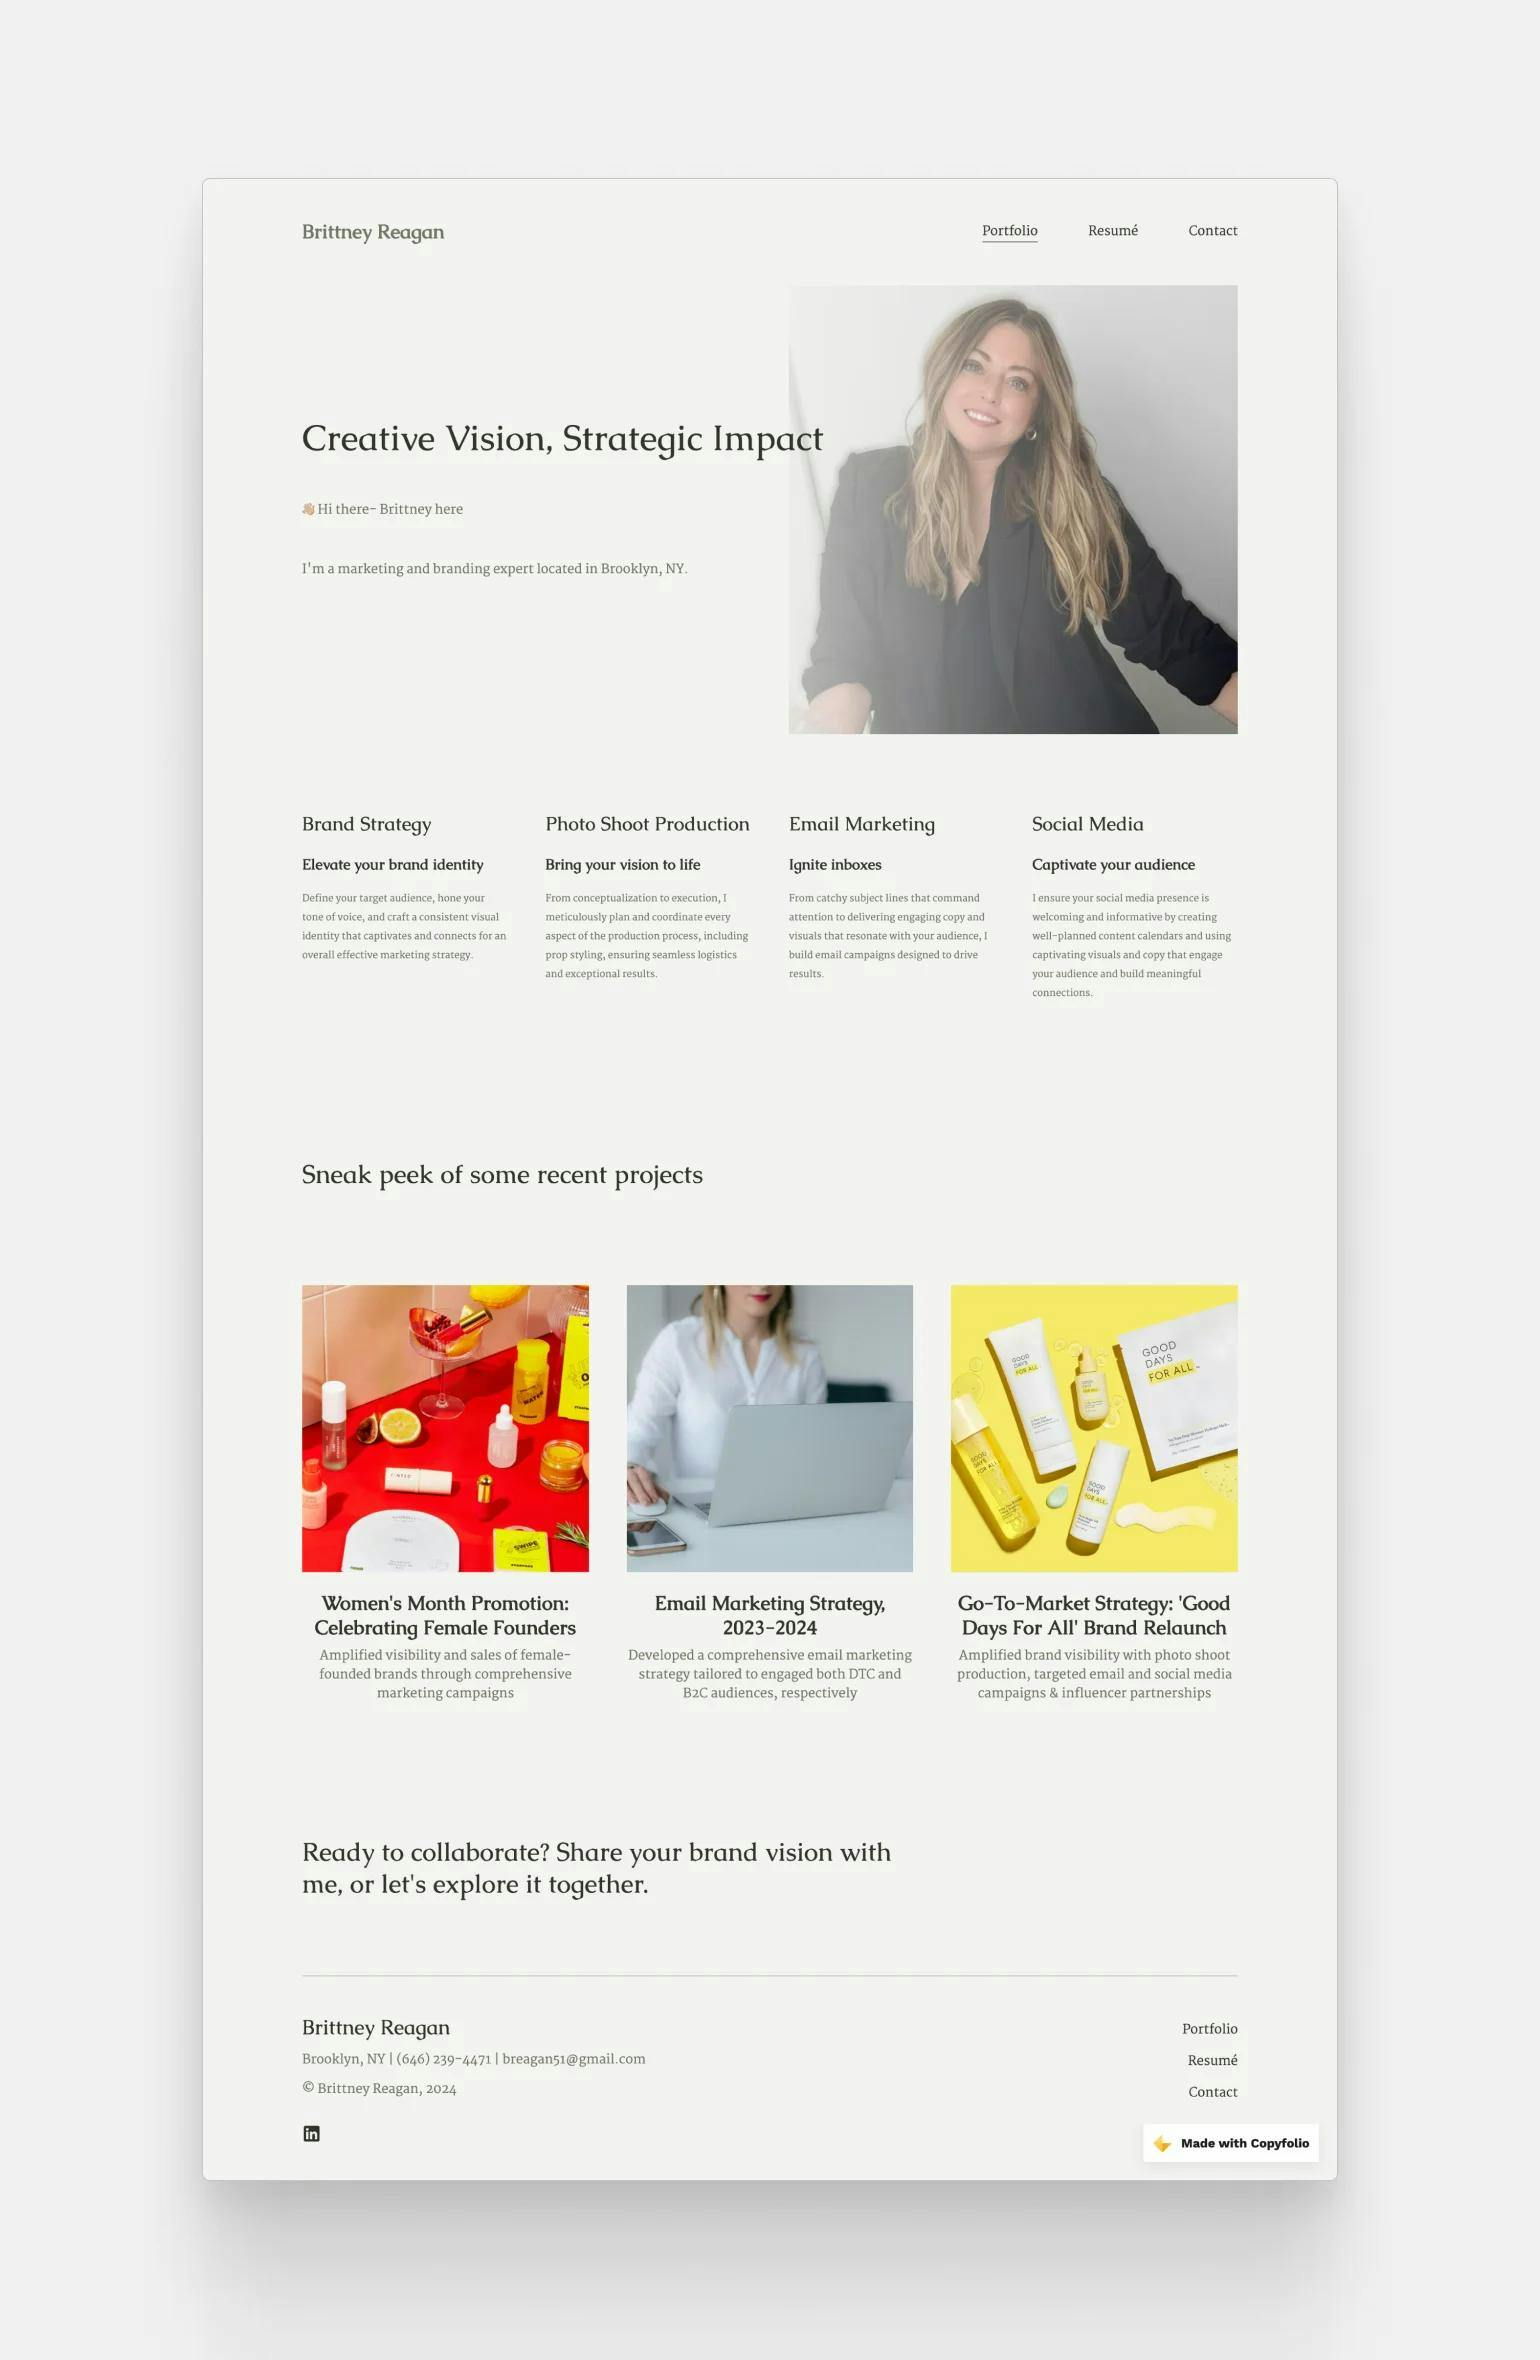 The portfolio website of Brittney Reagan, marketing and branding expert from New York